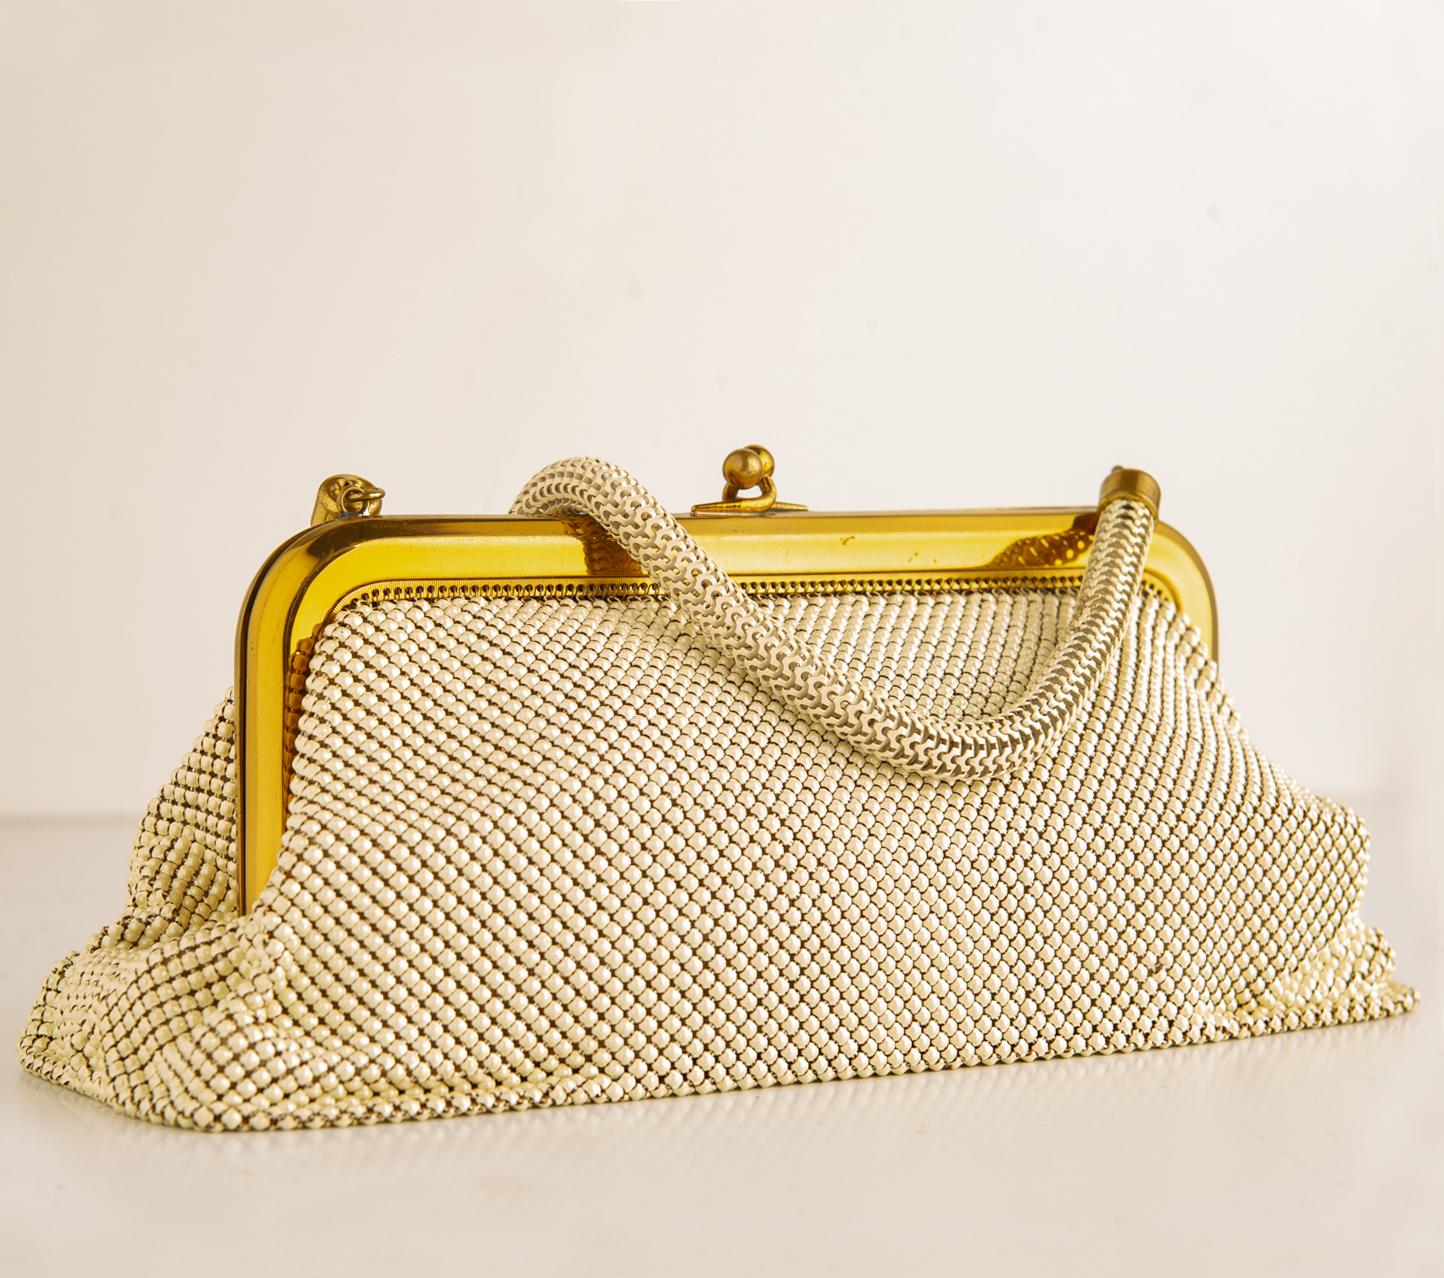  Vintage Whiting & Davis Evening Bag In Excellent Condition For Sale In Alessandria, Piemonte